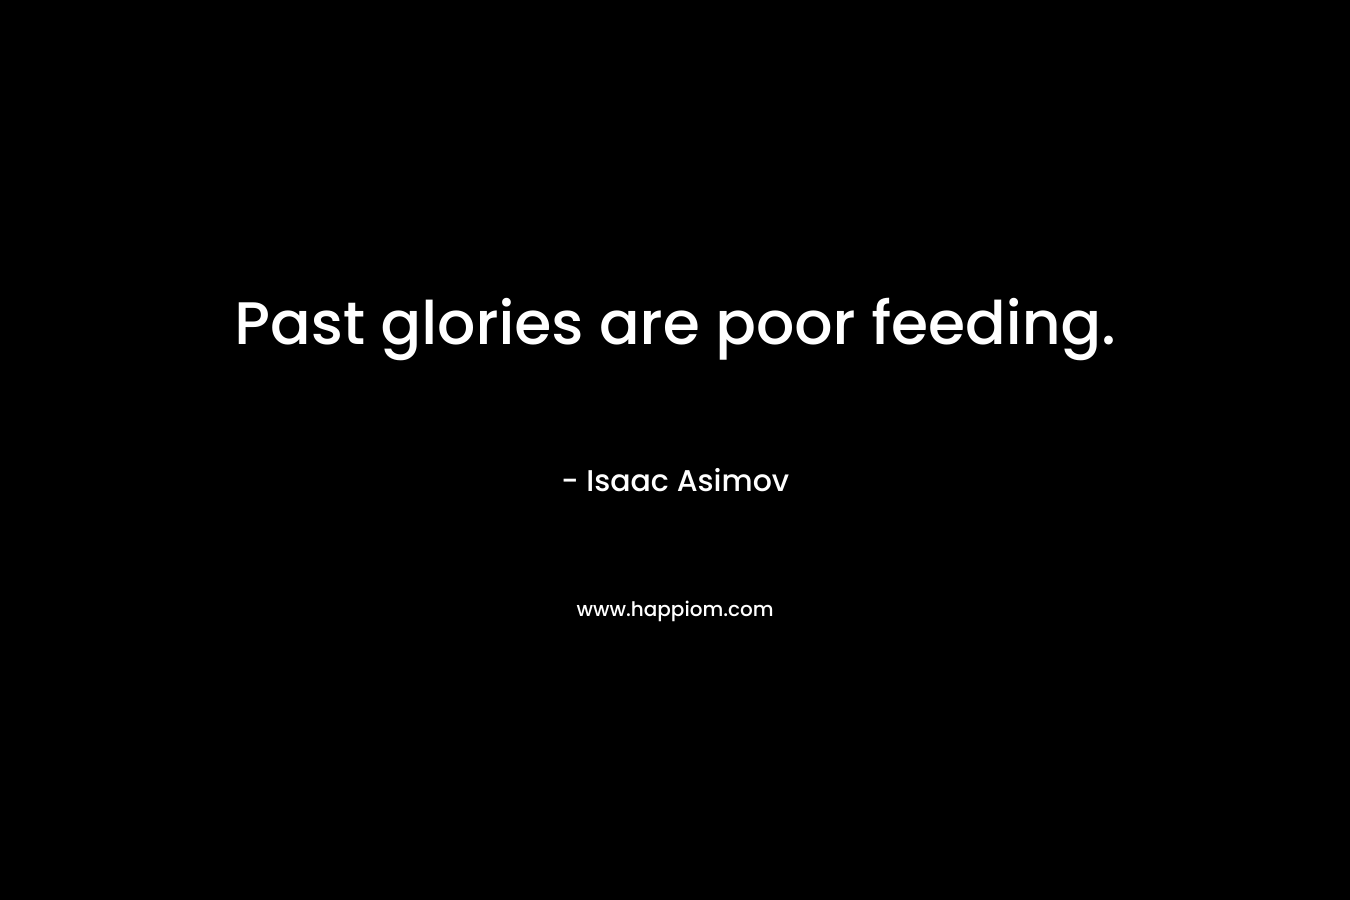 Past glories are poor feeding. – Isaac Asimov